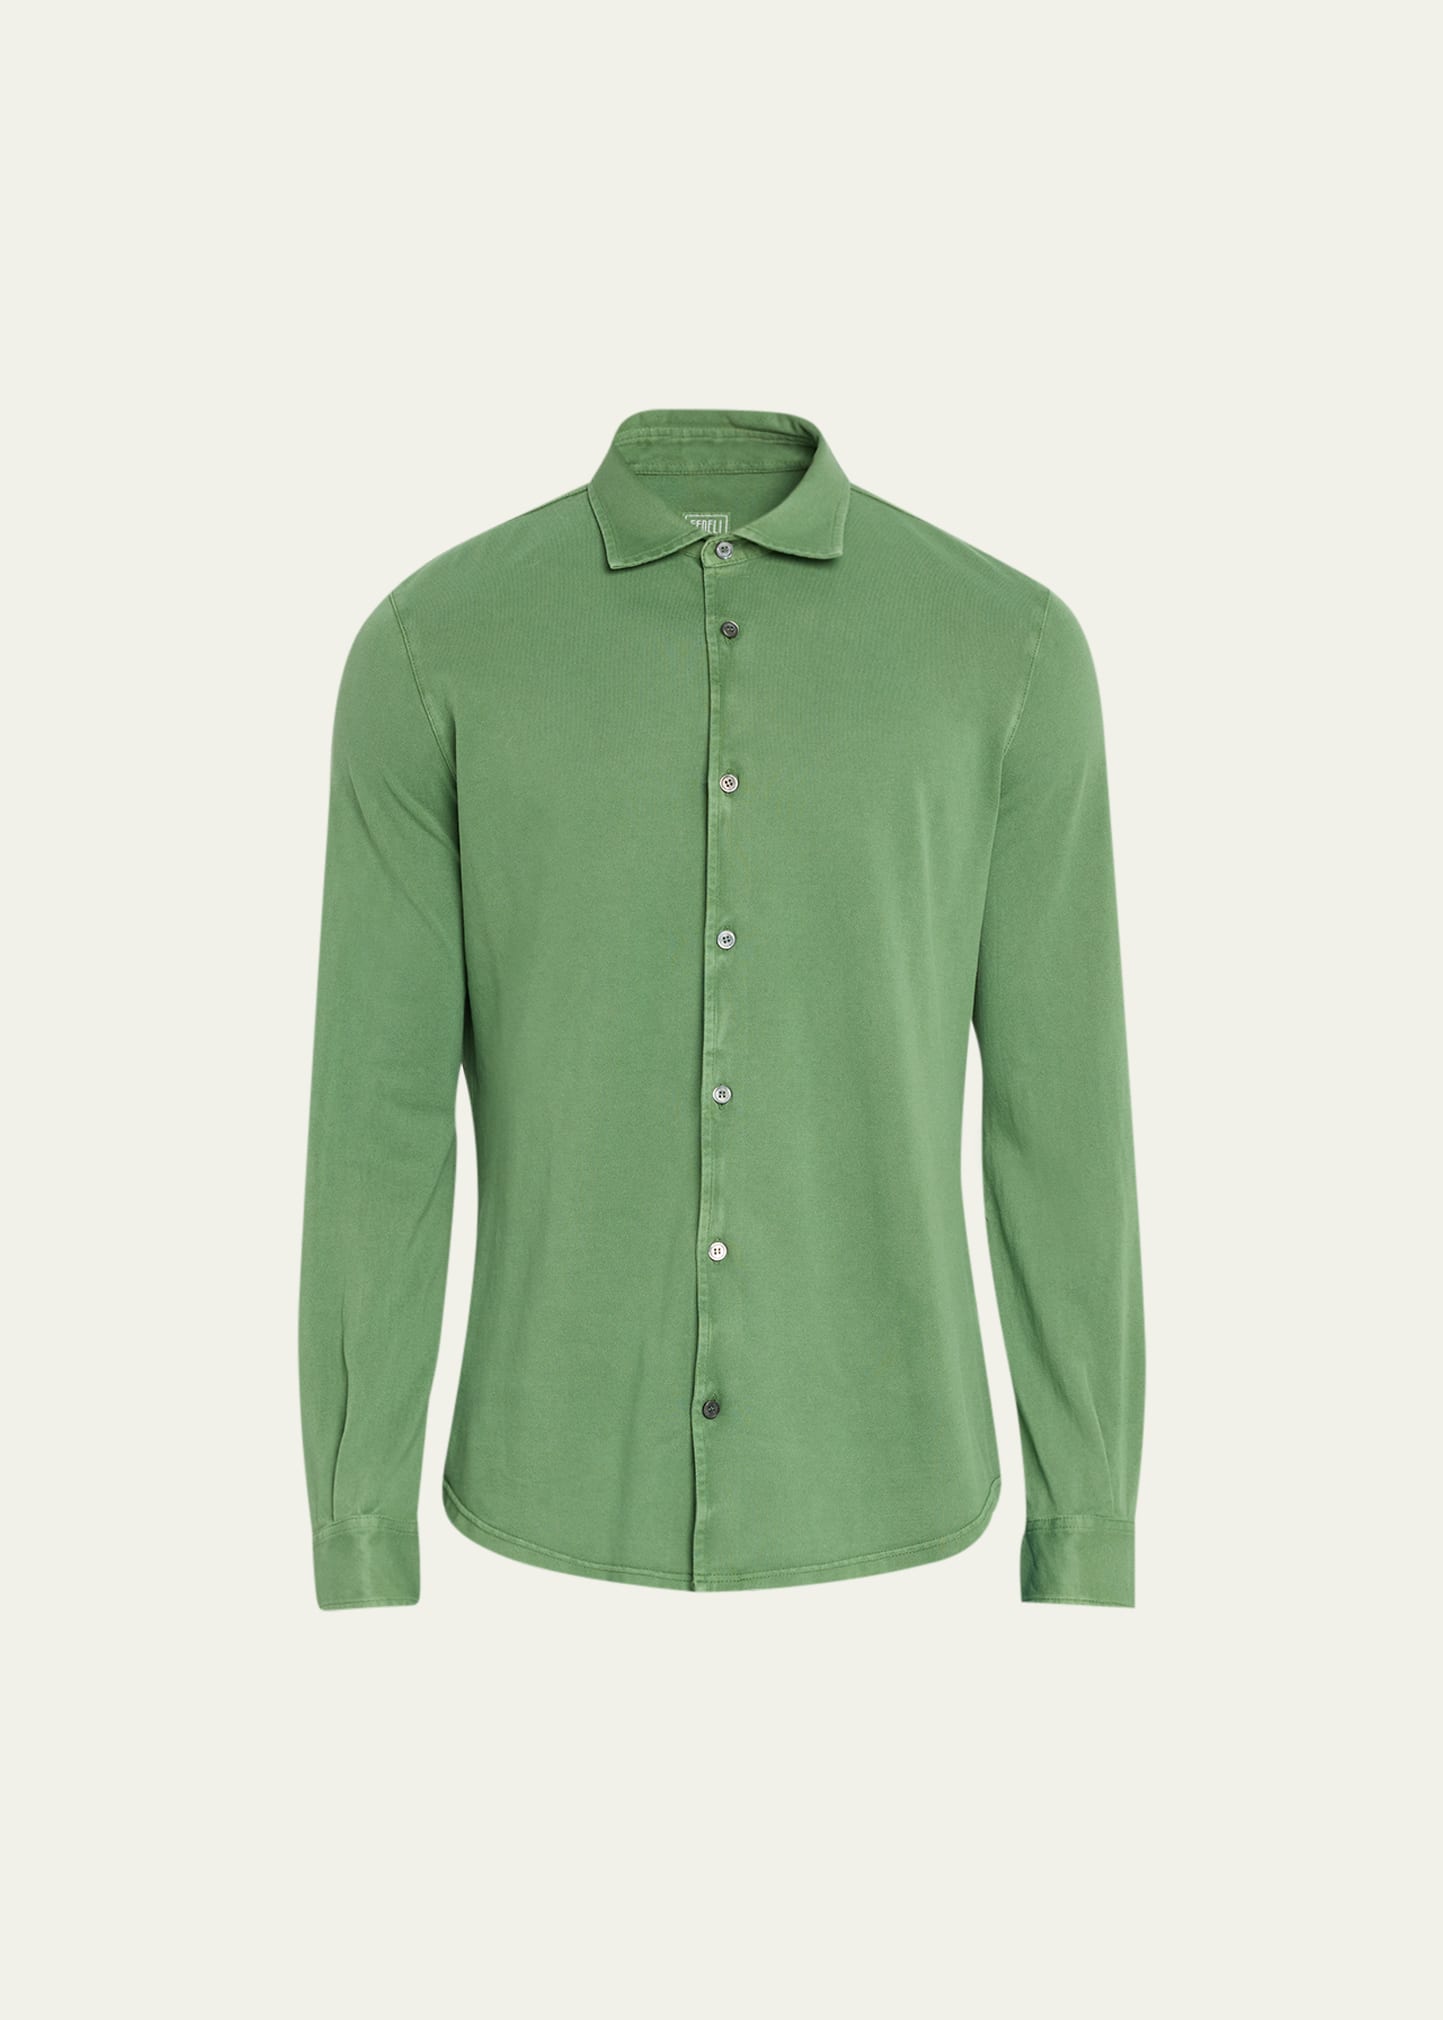 Fedeli Men's Cotton Pique Sport Shirt In Green